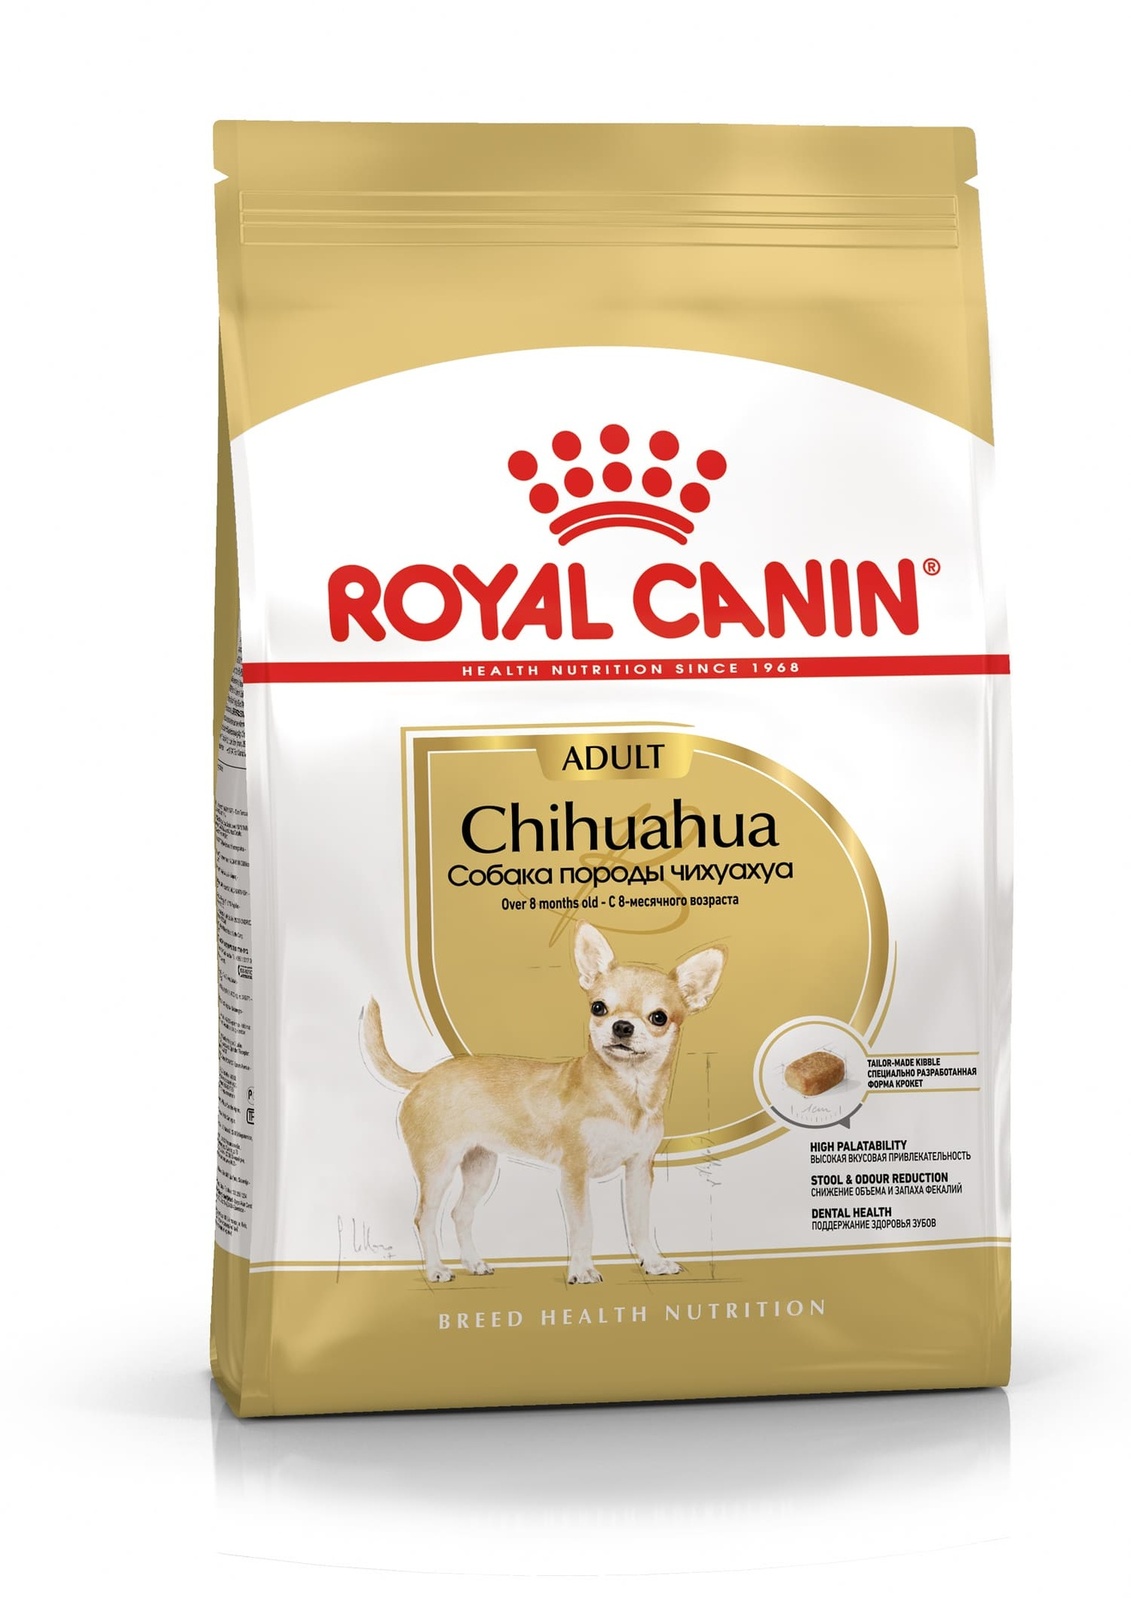 Royal Canin Royal Canin сухой корм для чихуахуа с 8 месяцев (500 г) цена